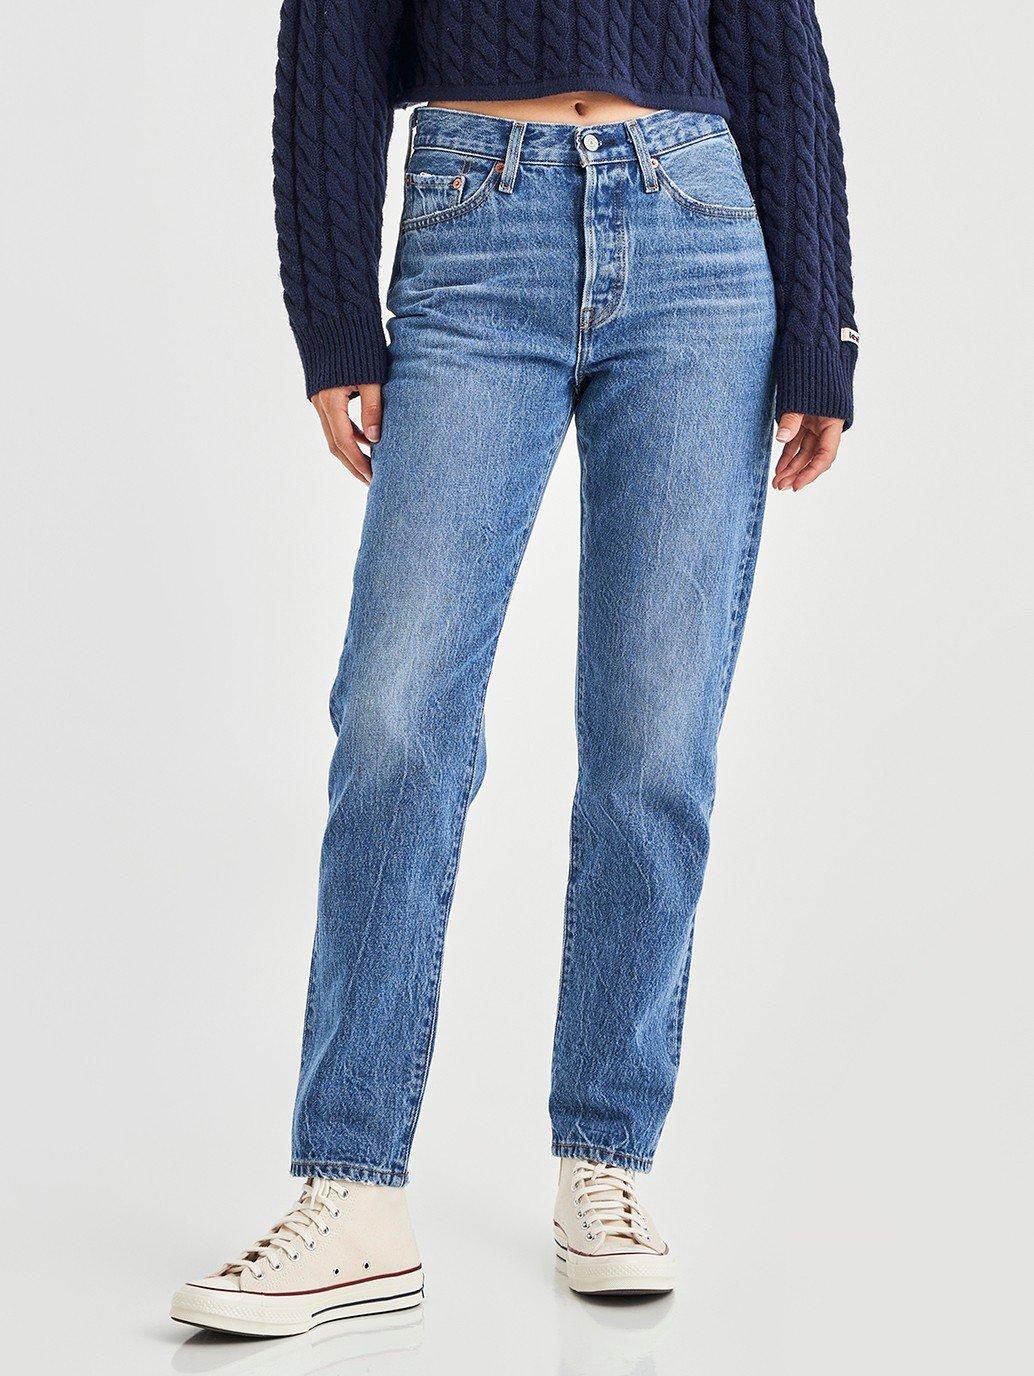 Afstotend taart Situatie Buy Levi's® Women's 501® '81 Jeans | Levi's® Official Online Store SG